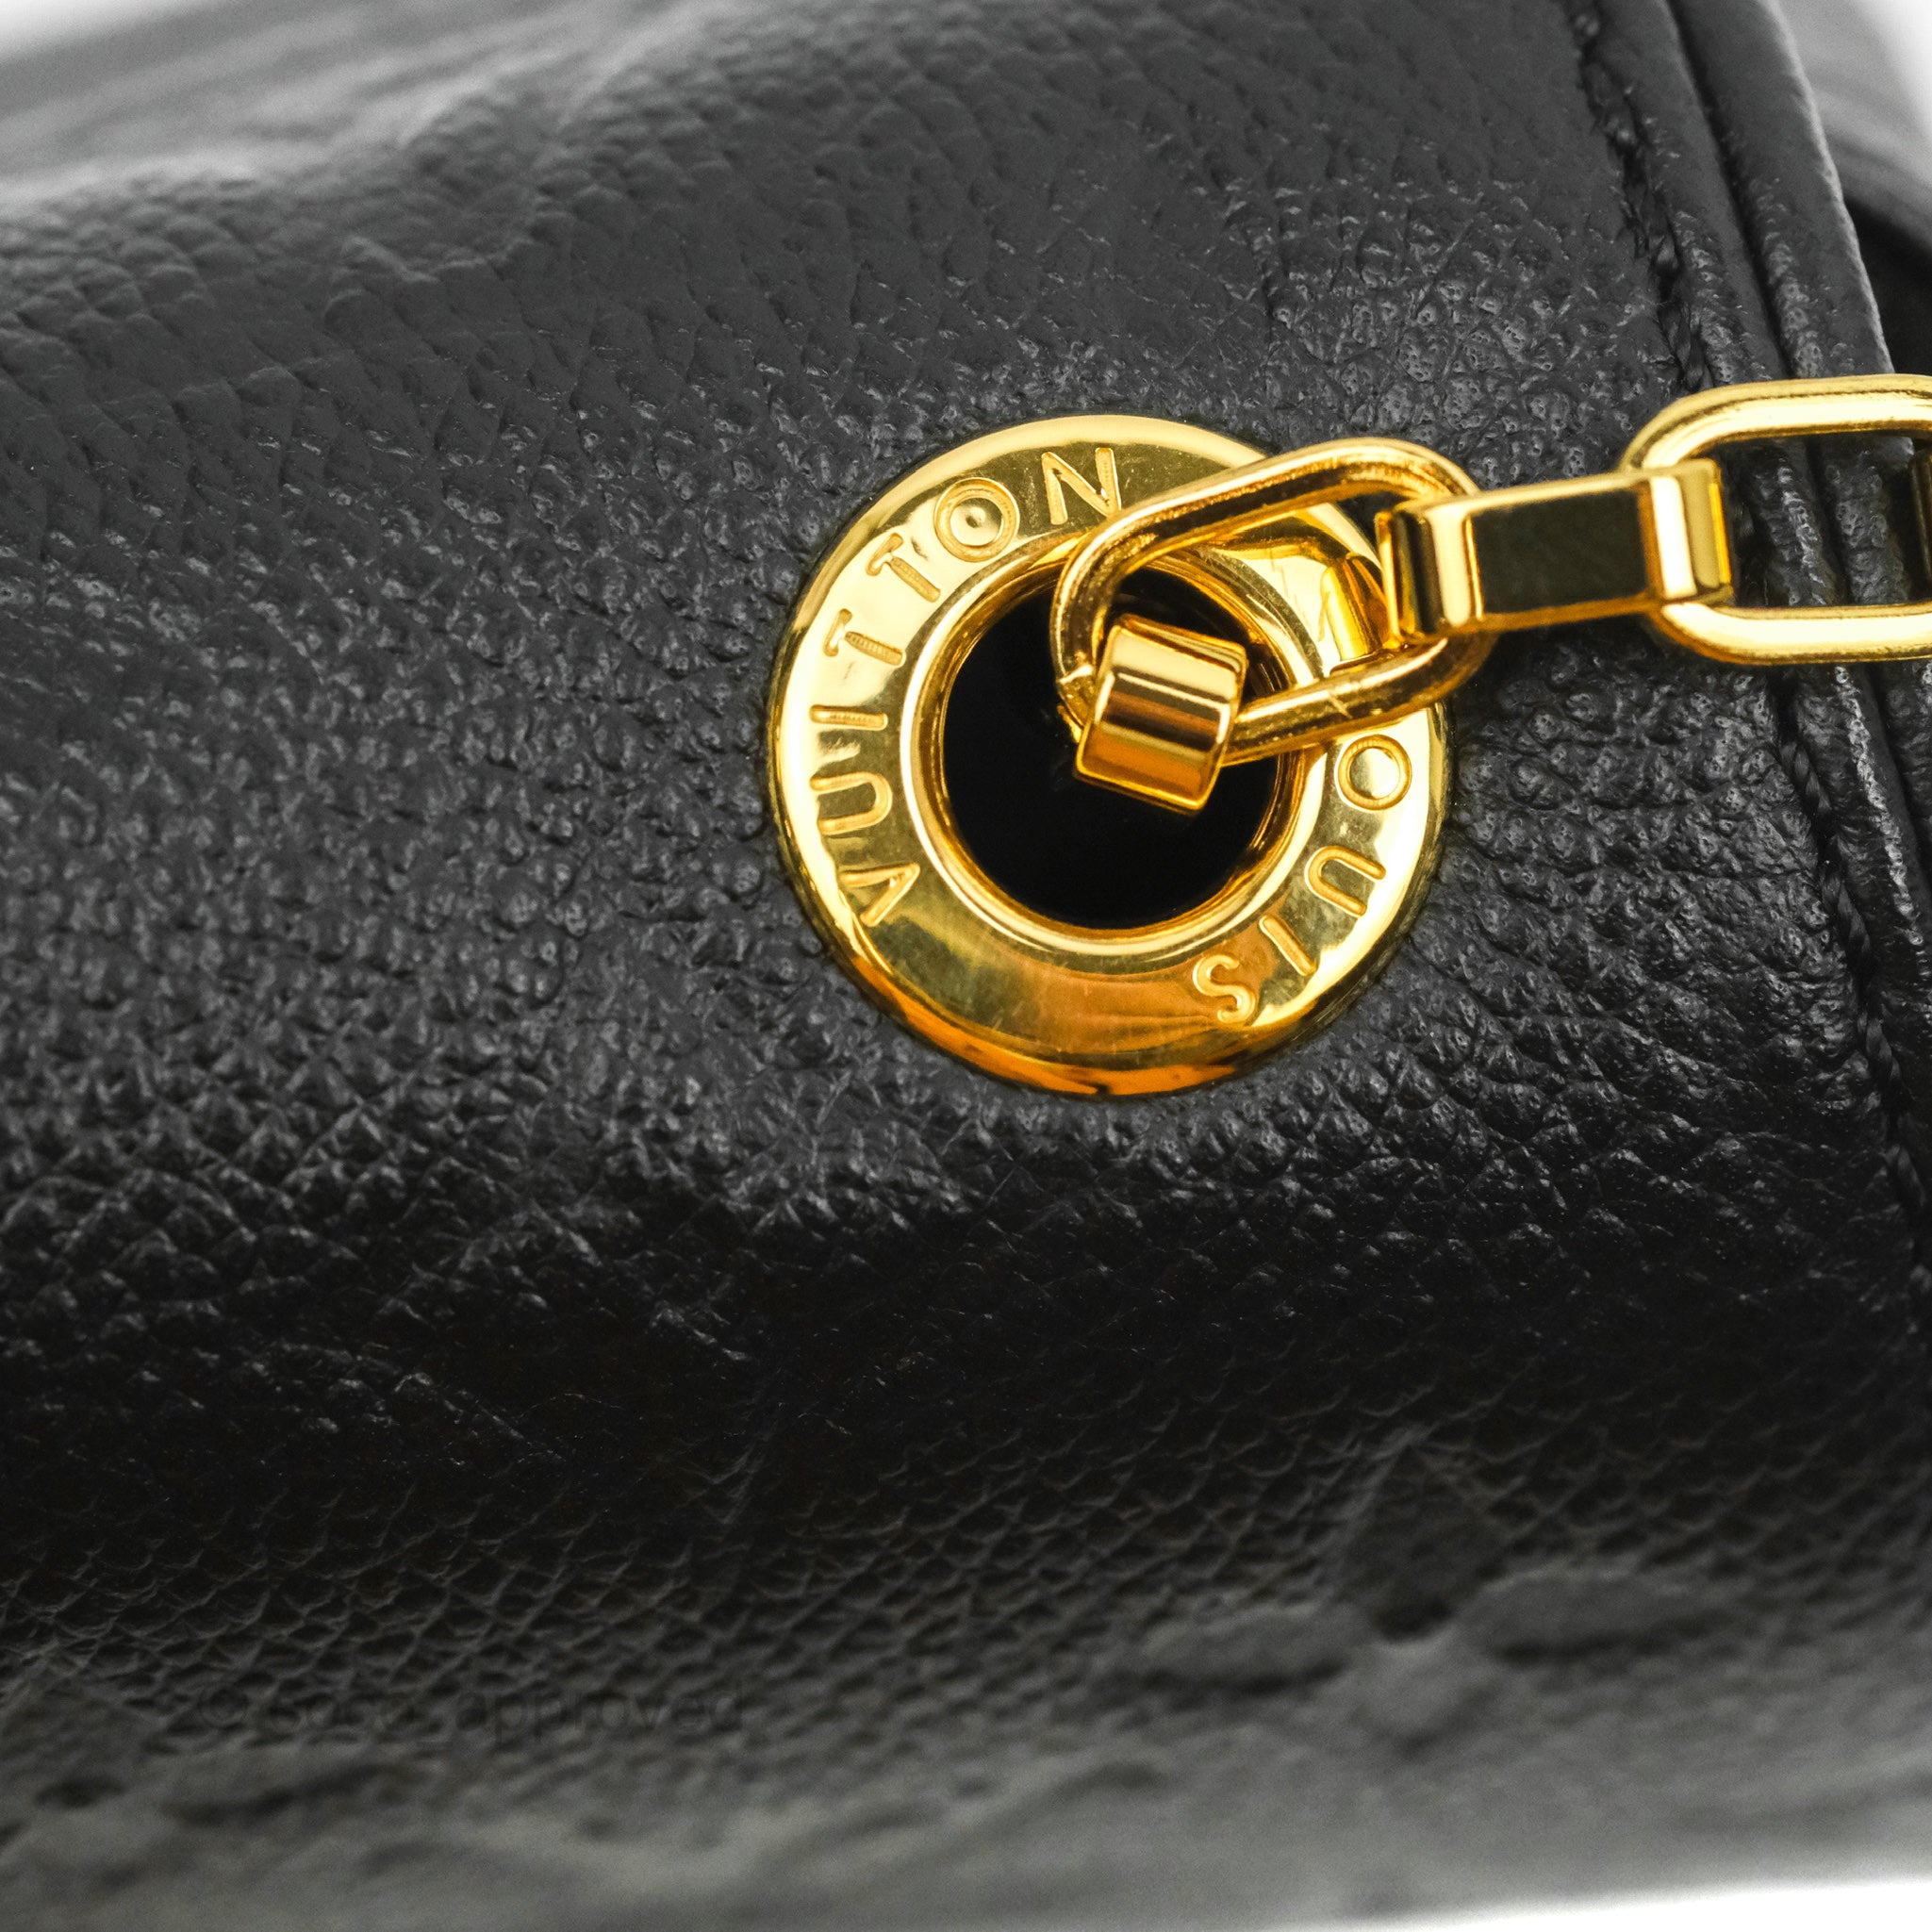 ⭐️Deal!⭐️Preloved Louis Vuitton St.Germain Gm Bag Empreinte